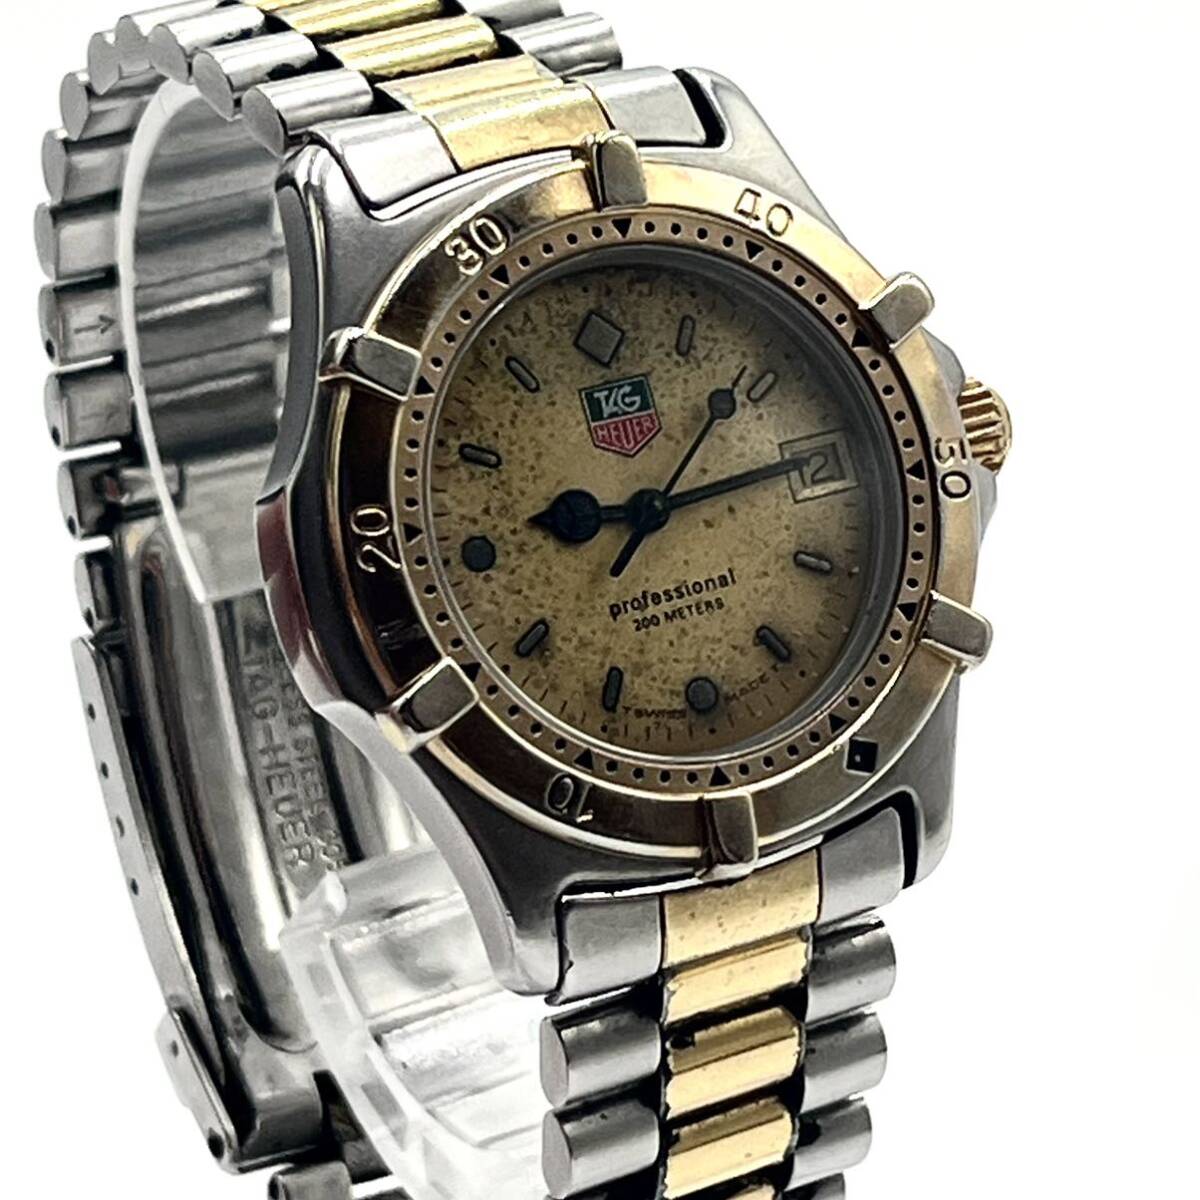 1 jpy TAG HEUER TAG Heuer Professional 200M Date quartz wristwatch men's lady's rotation bezel diver 